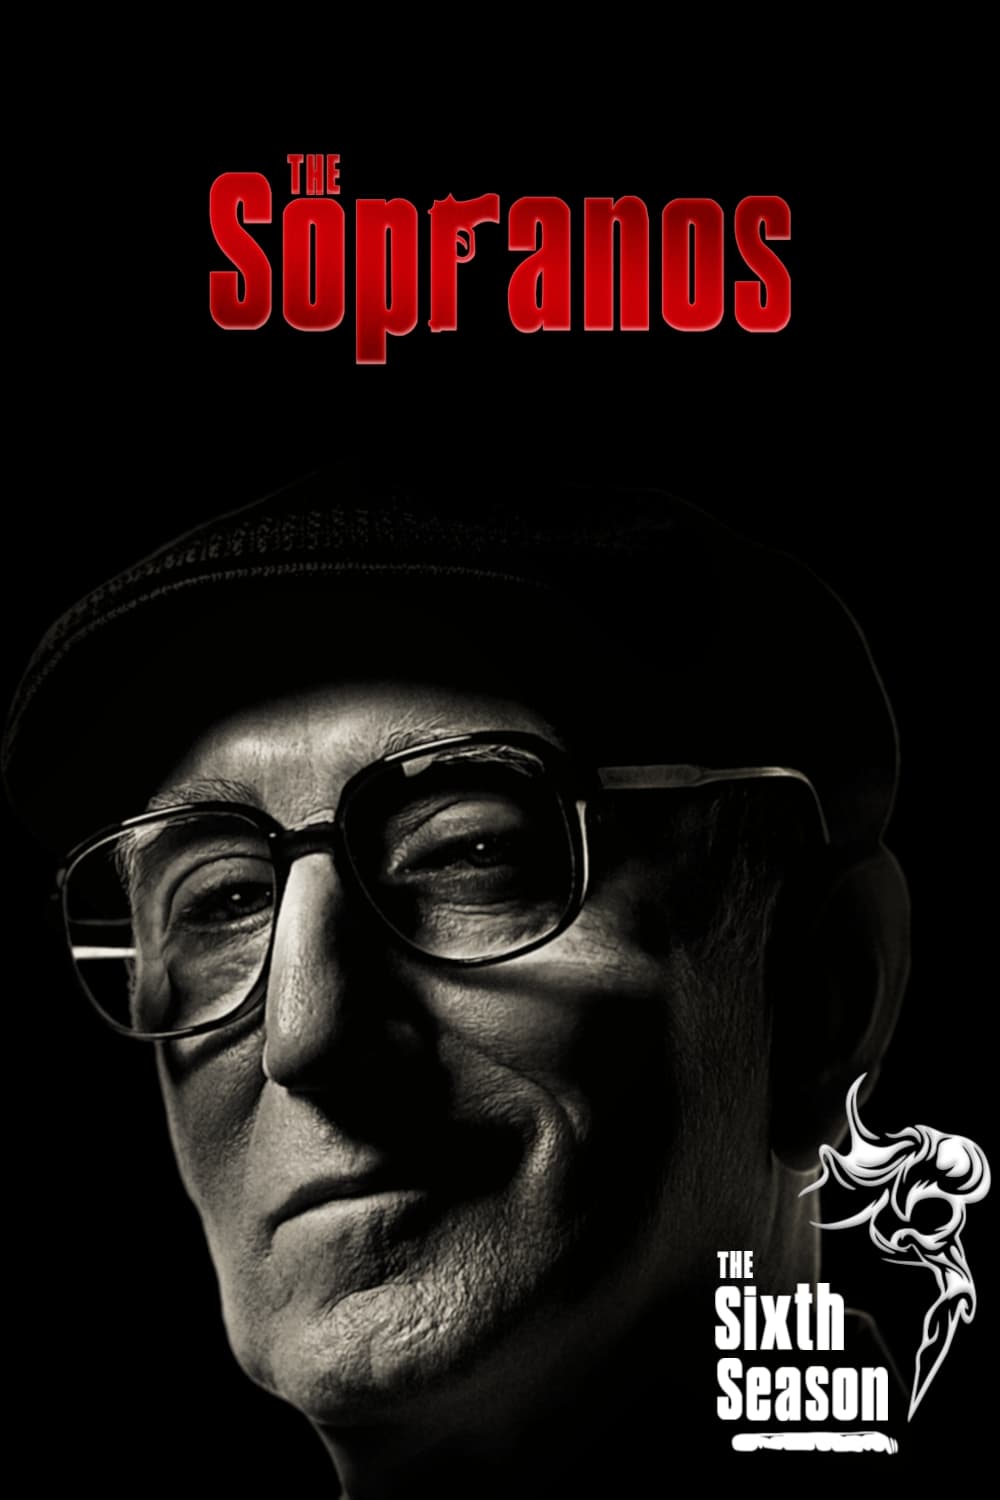 The Sopranos (1999) S06 BDRip 1080p HEVC x265 10-bit mp4a 5.1 NLSubs